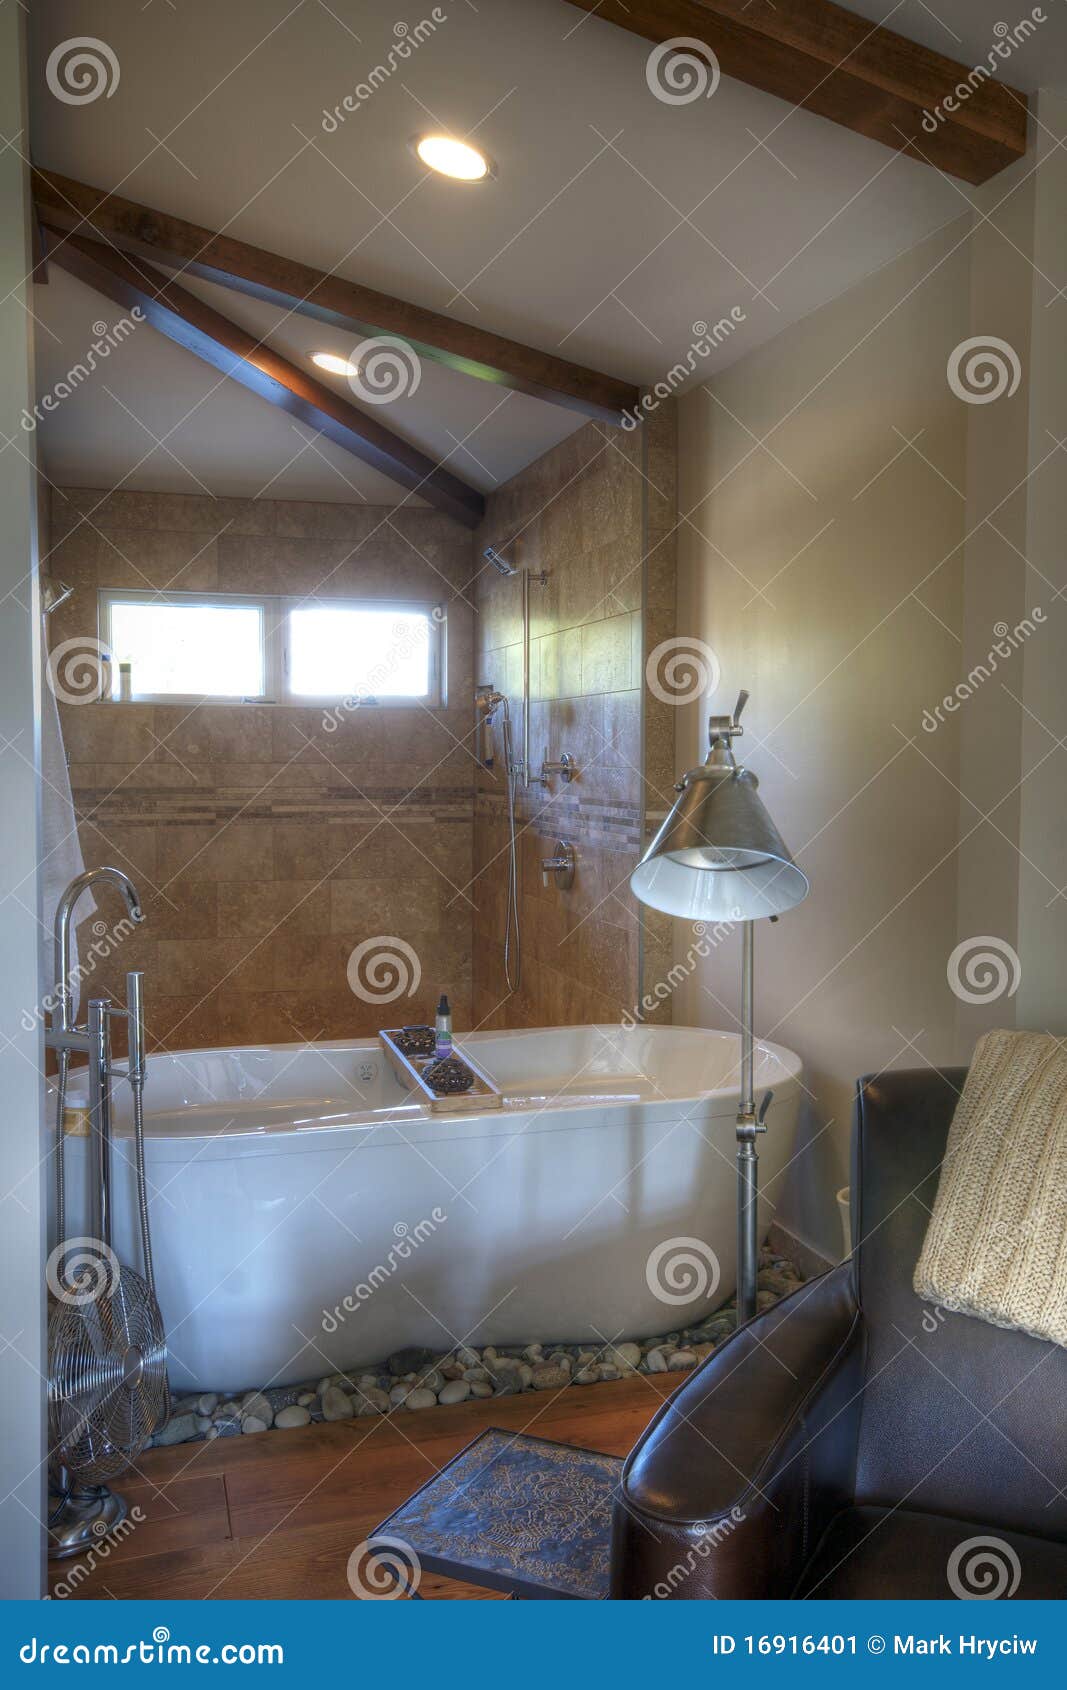 master bathroom bedroom